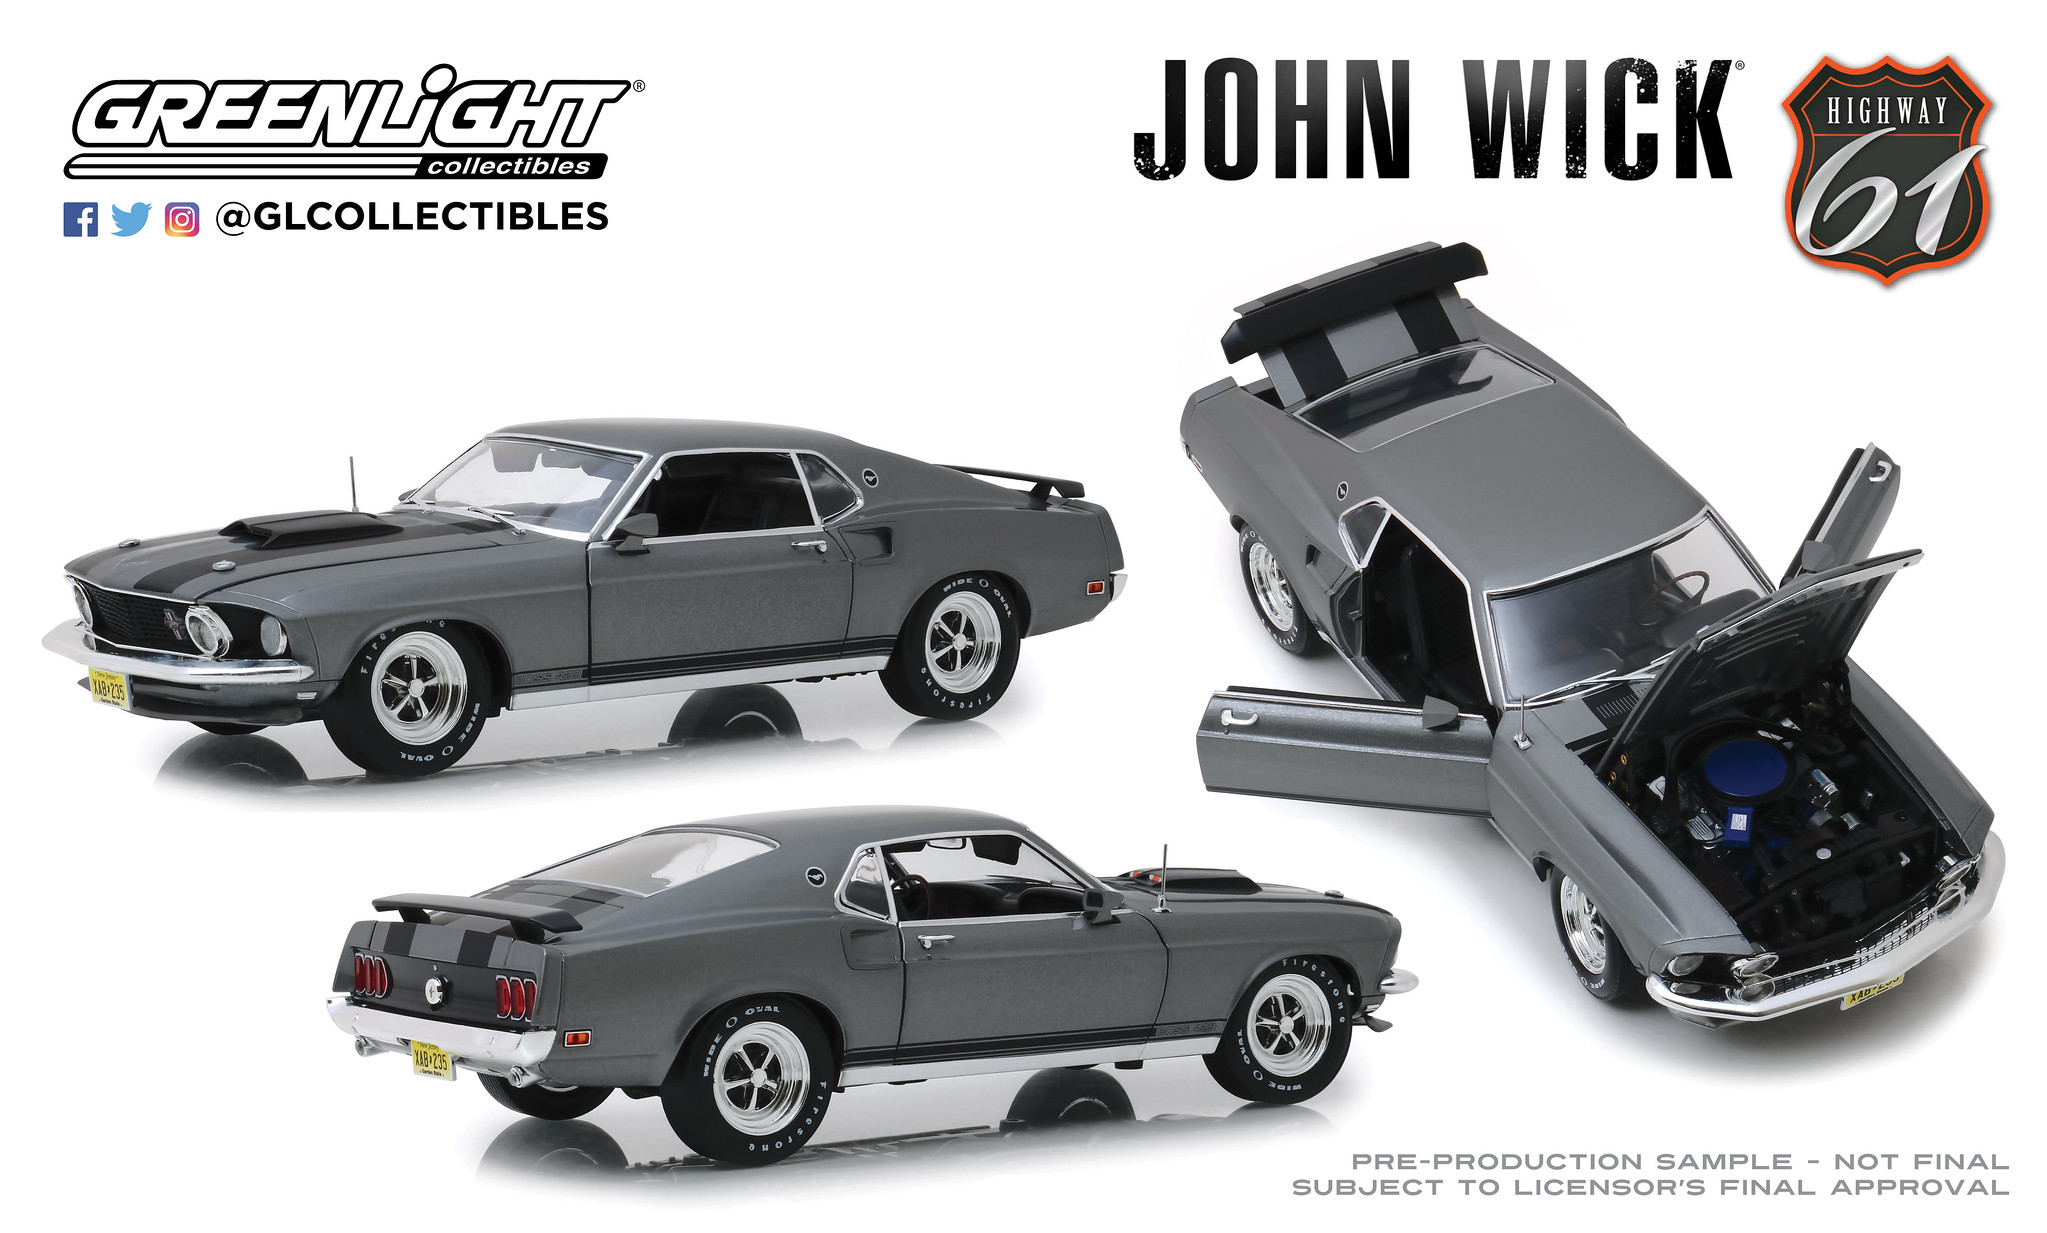 1969 Ford Mustang Boss 429 - John Wick (2014) by Greenlight